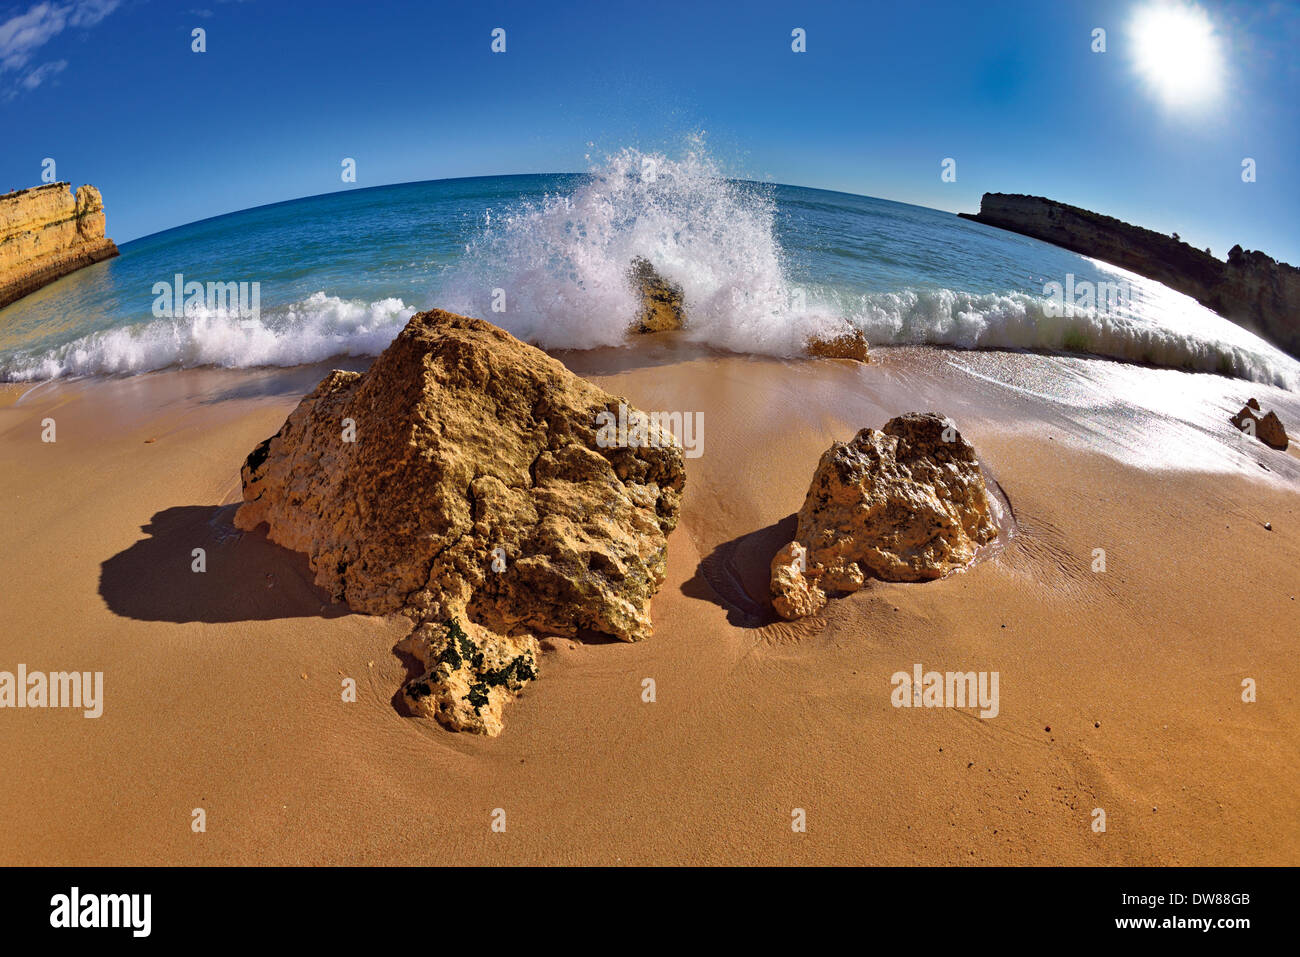 Portugal, Algarve: Waves and rocks at beach Prainha Stock Photo